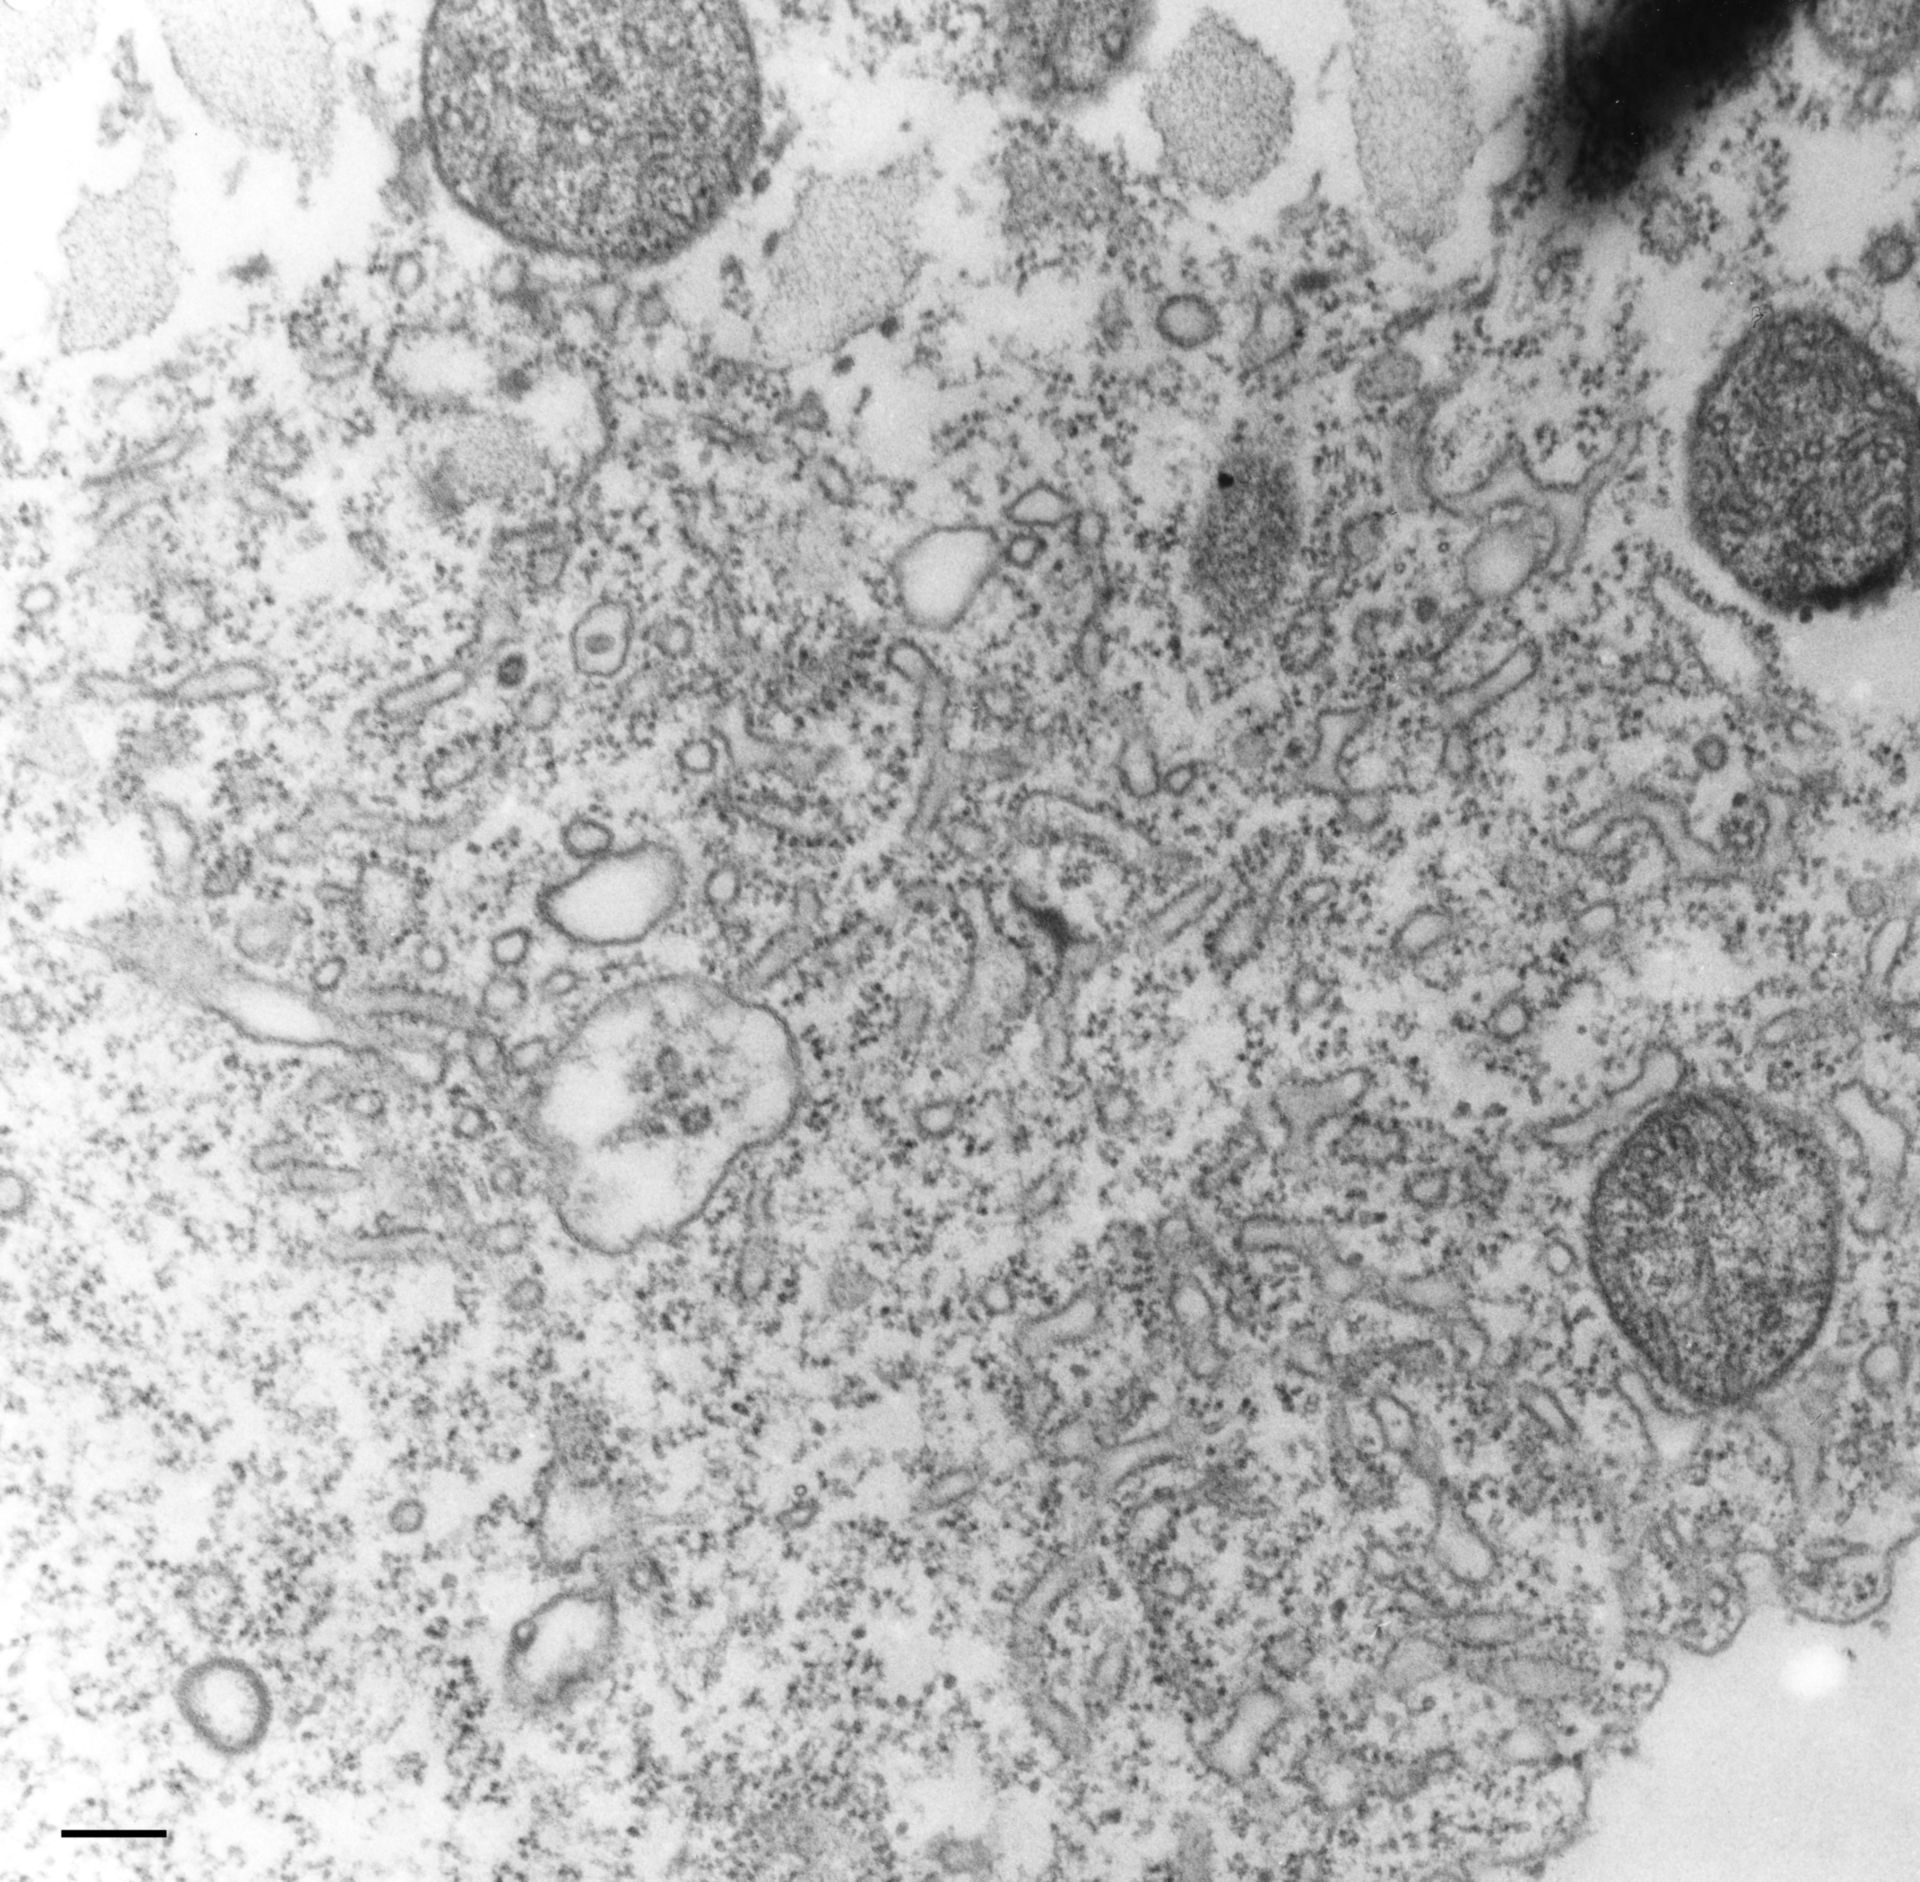 Tetrahymena pyriformis (Intrinsic to contractile vacuolar membrane) - CIL:36235